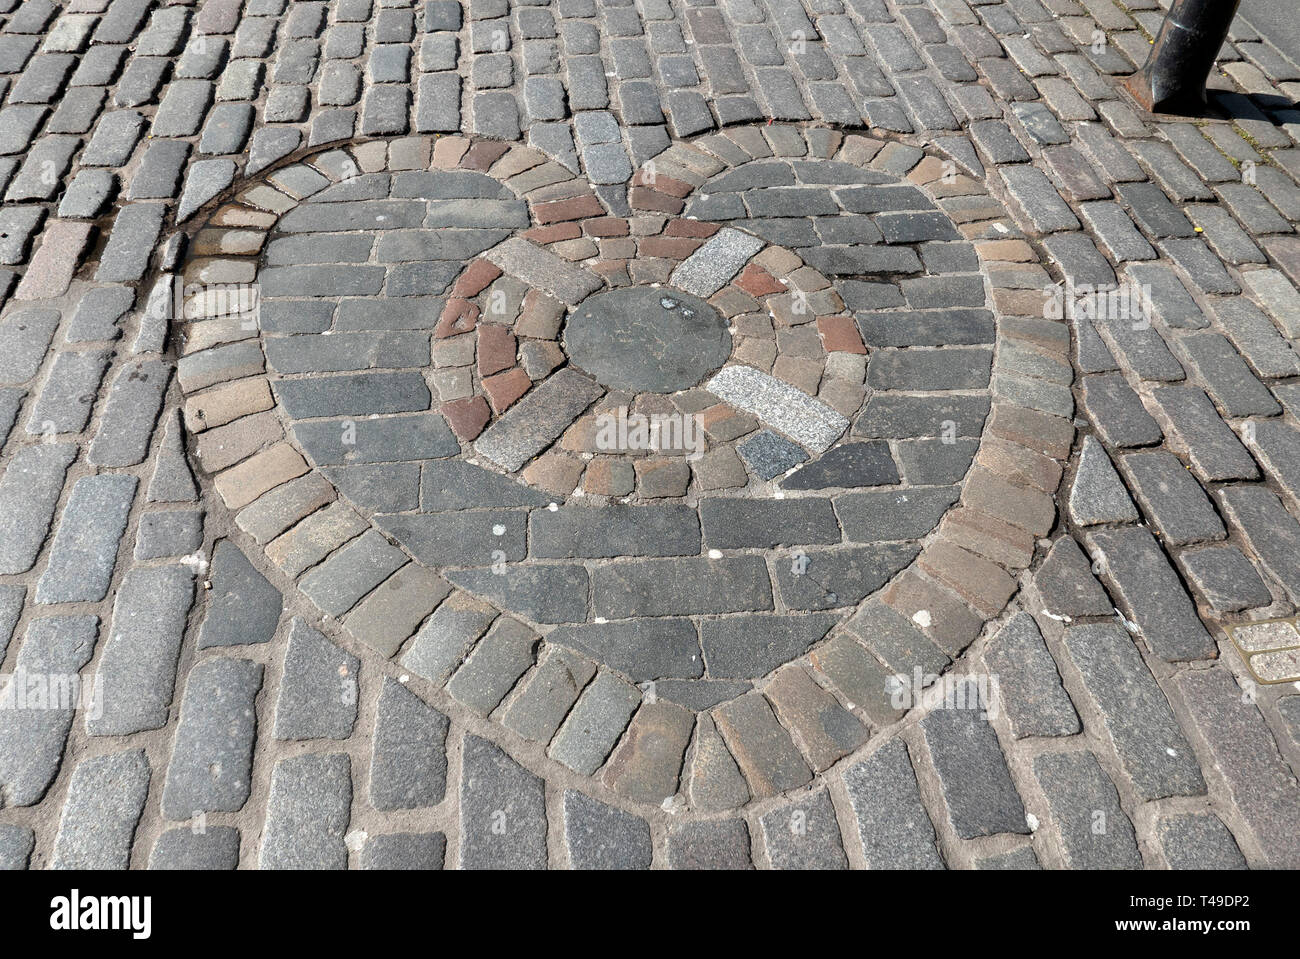 Heart of Midlothian on the pavement of the Royal Mile in Edinburgh, Scotland, UK. Europe Stock Photo